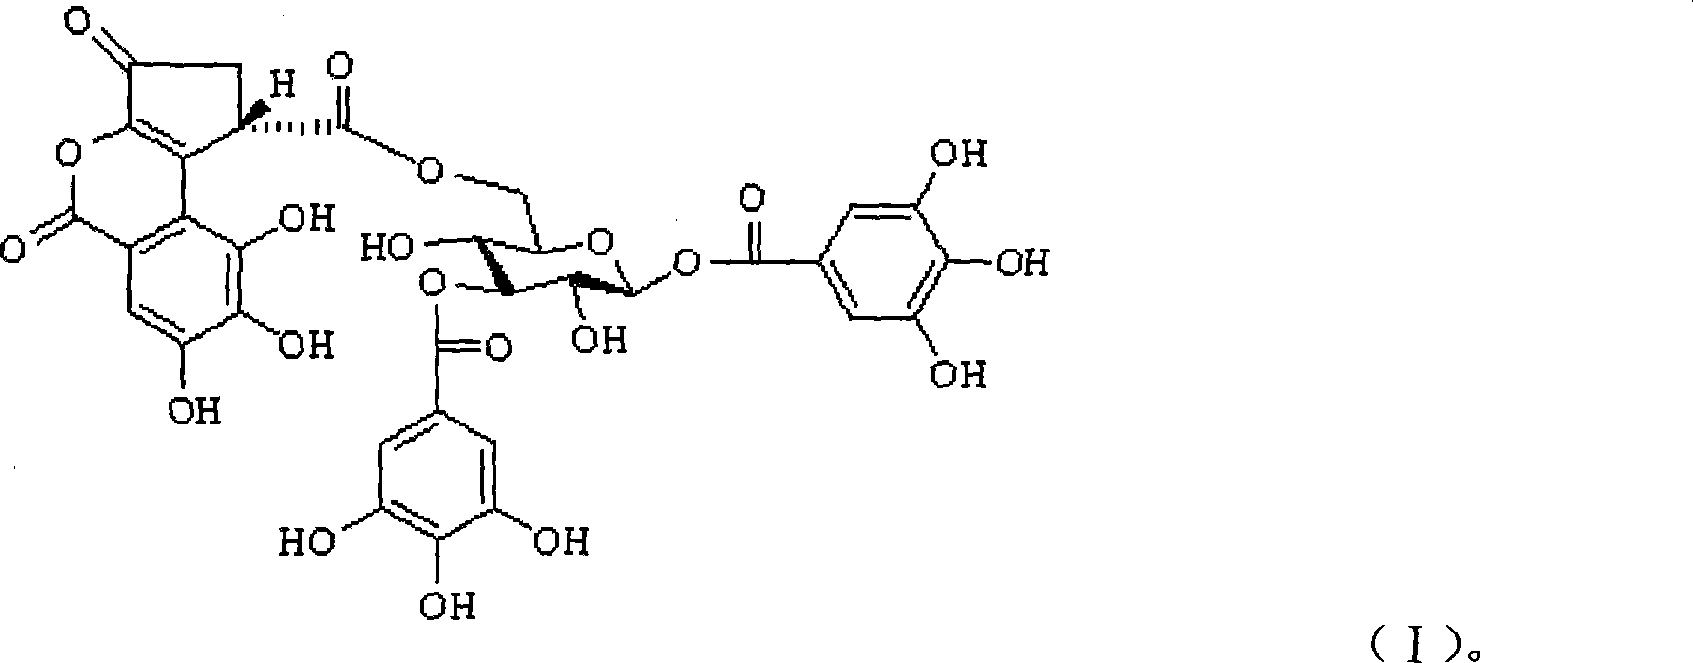 1,3-O-di-galloyl-6-O-(S)-decapetalous caesalpinia acyl-beta-D-glucopyranose and application thereof